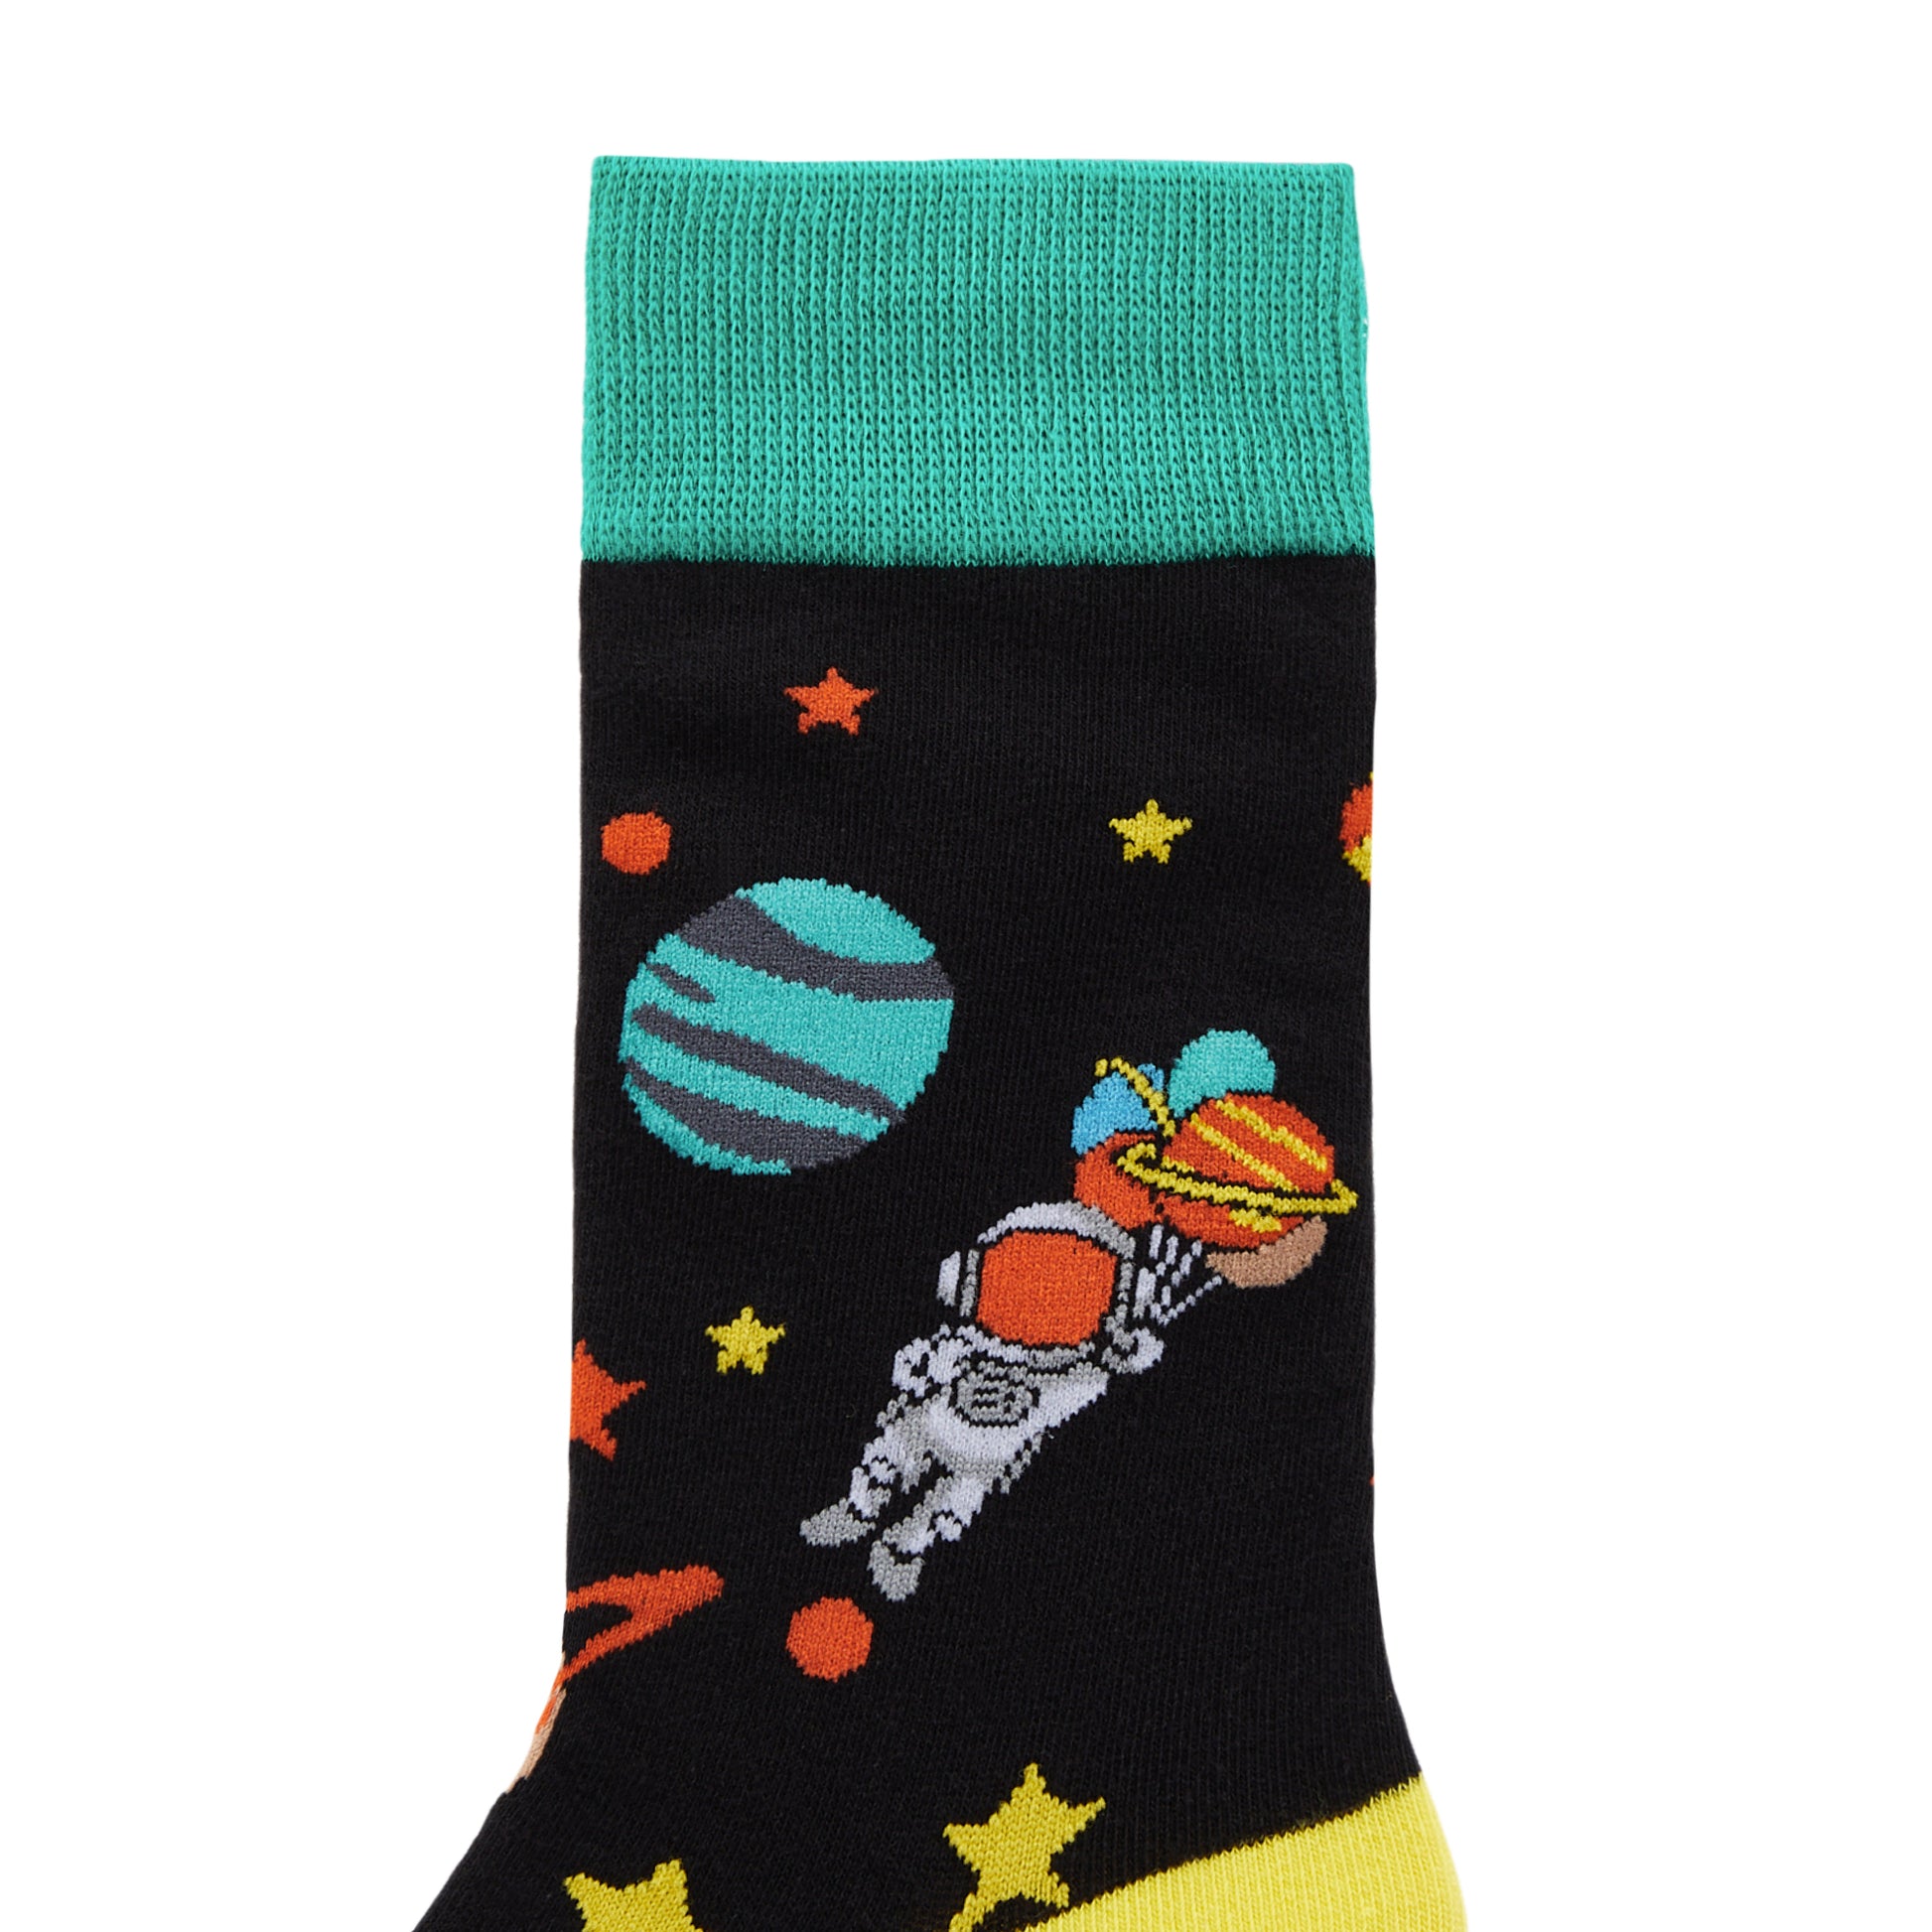 Space Explorer Printed Crew Length Socks - IDENTITY Apparel Shop